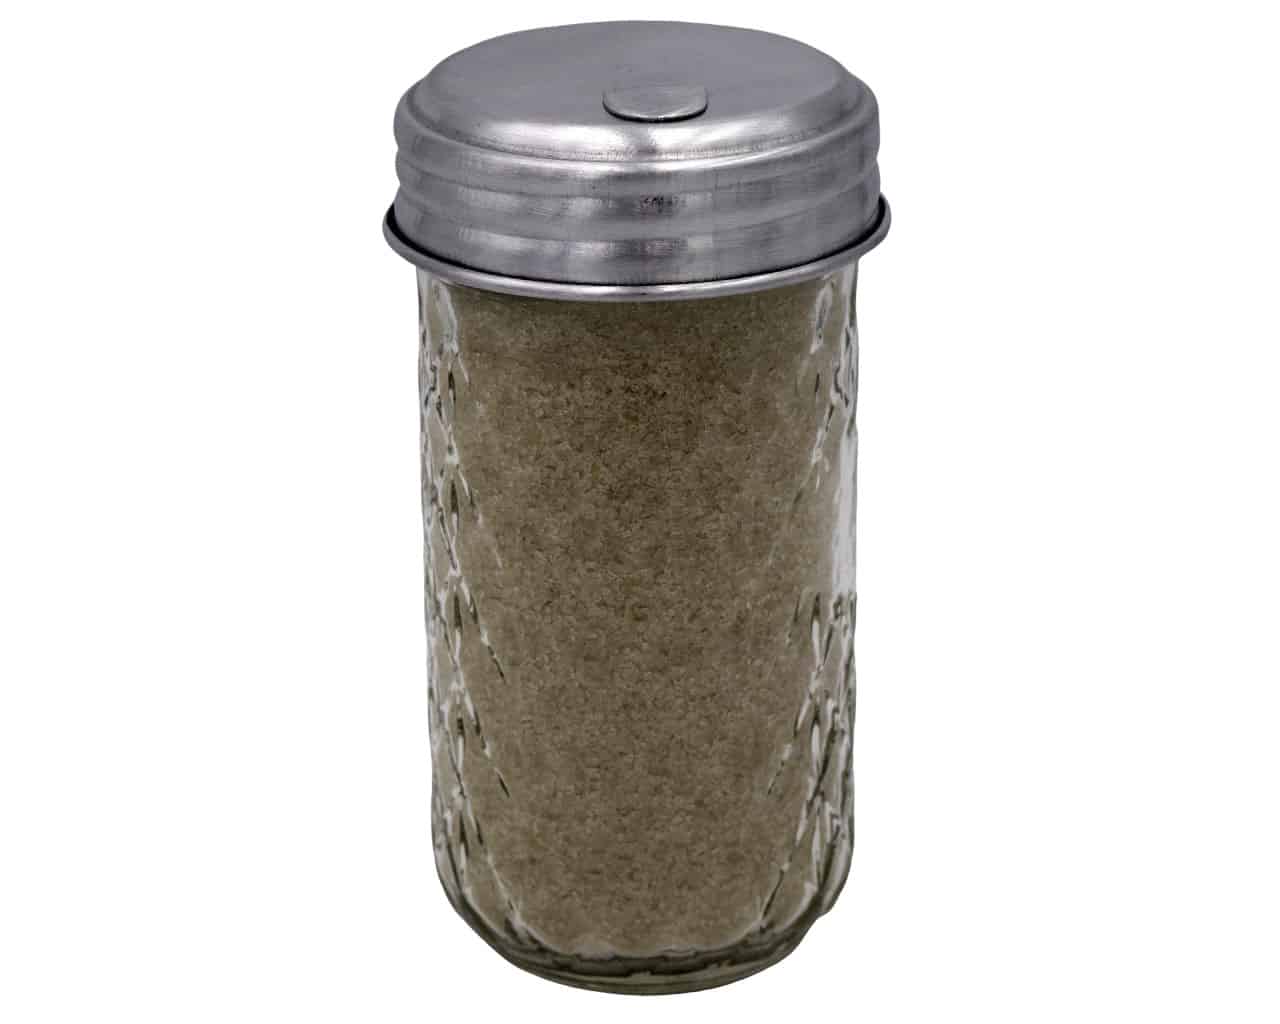 mason-jar-lifestyle-sugar-lid-aluminum-retro-diner-regular-mouth-ball-quilted-12oz-perfect-mason-jar-turbinado-salt-powder-spice